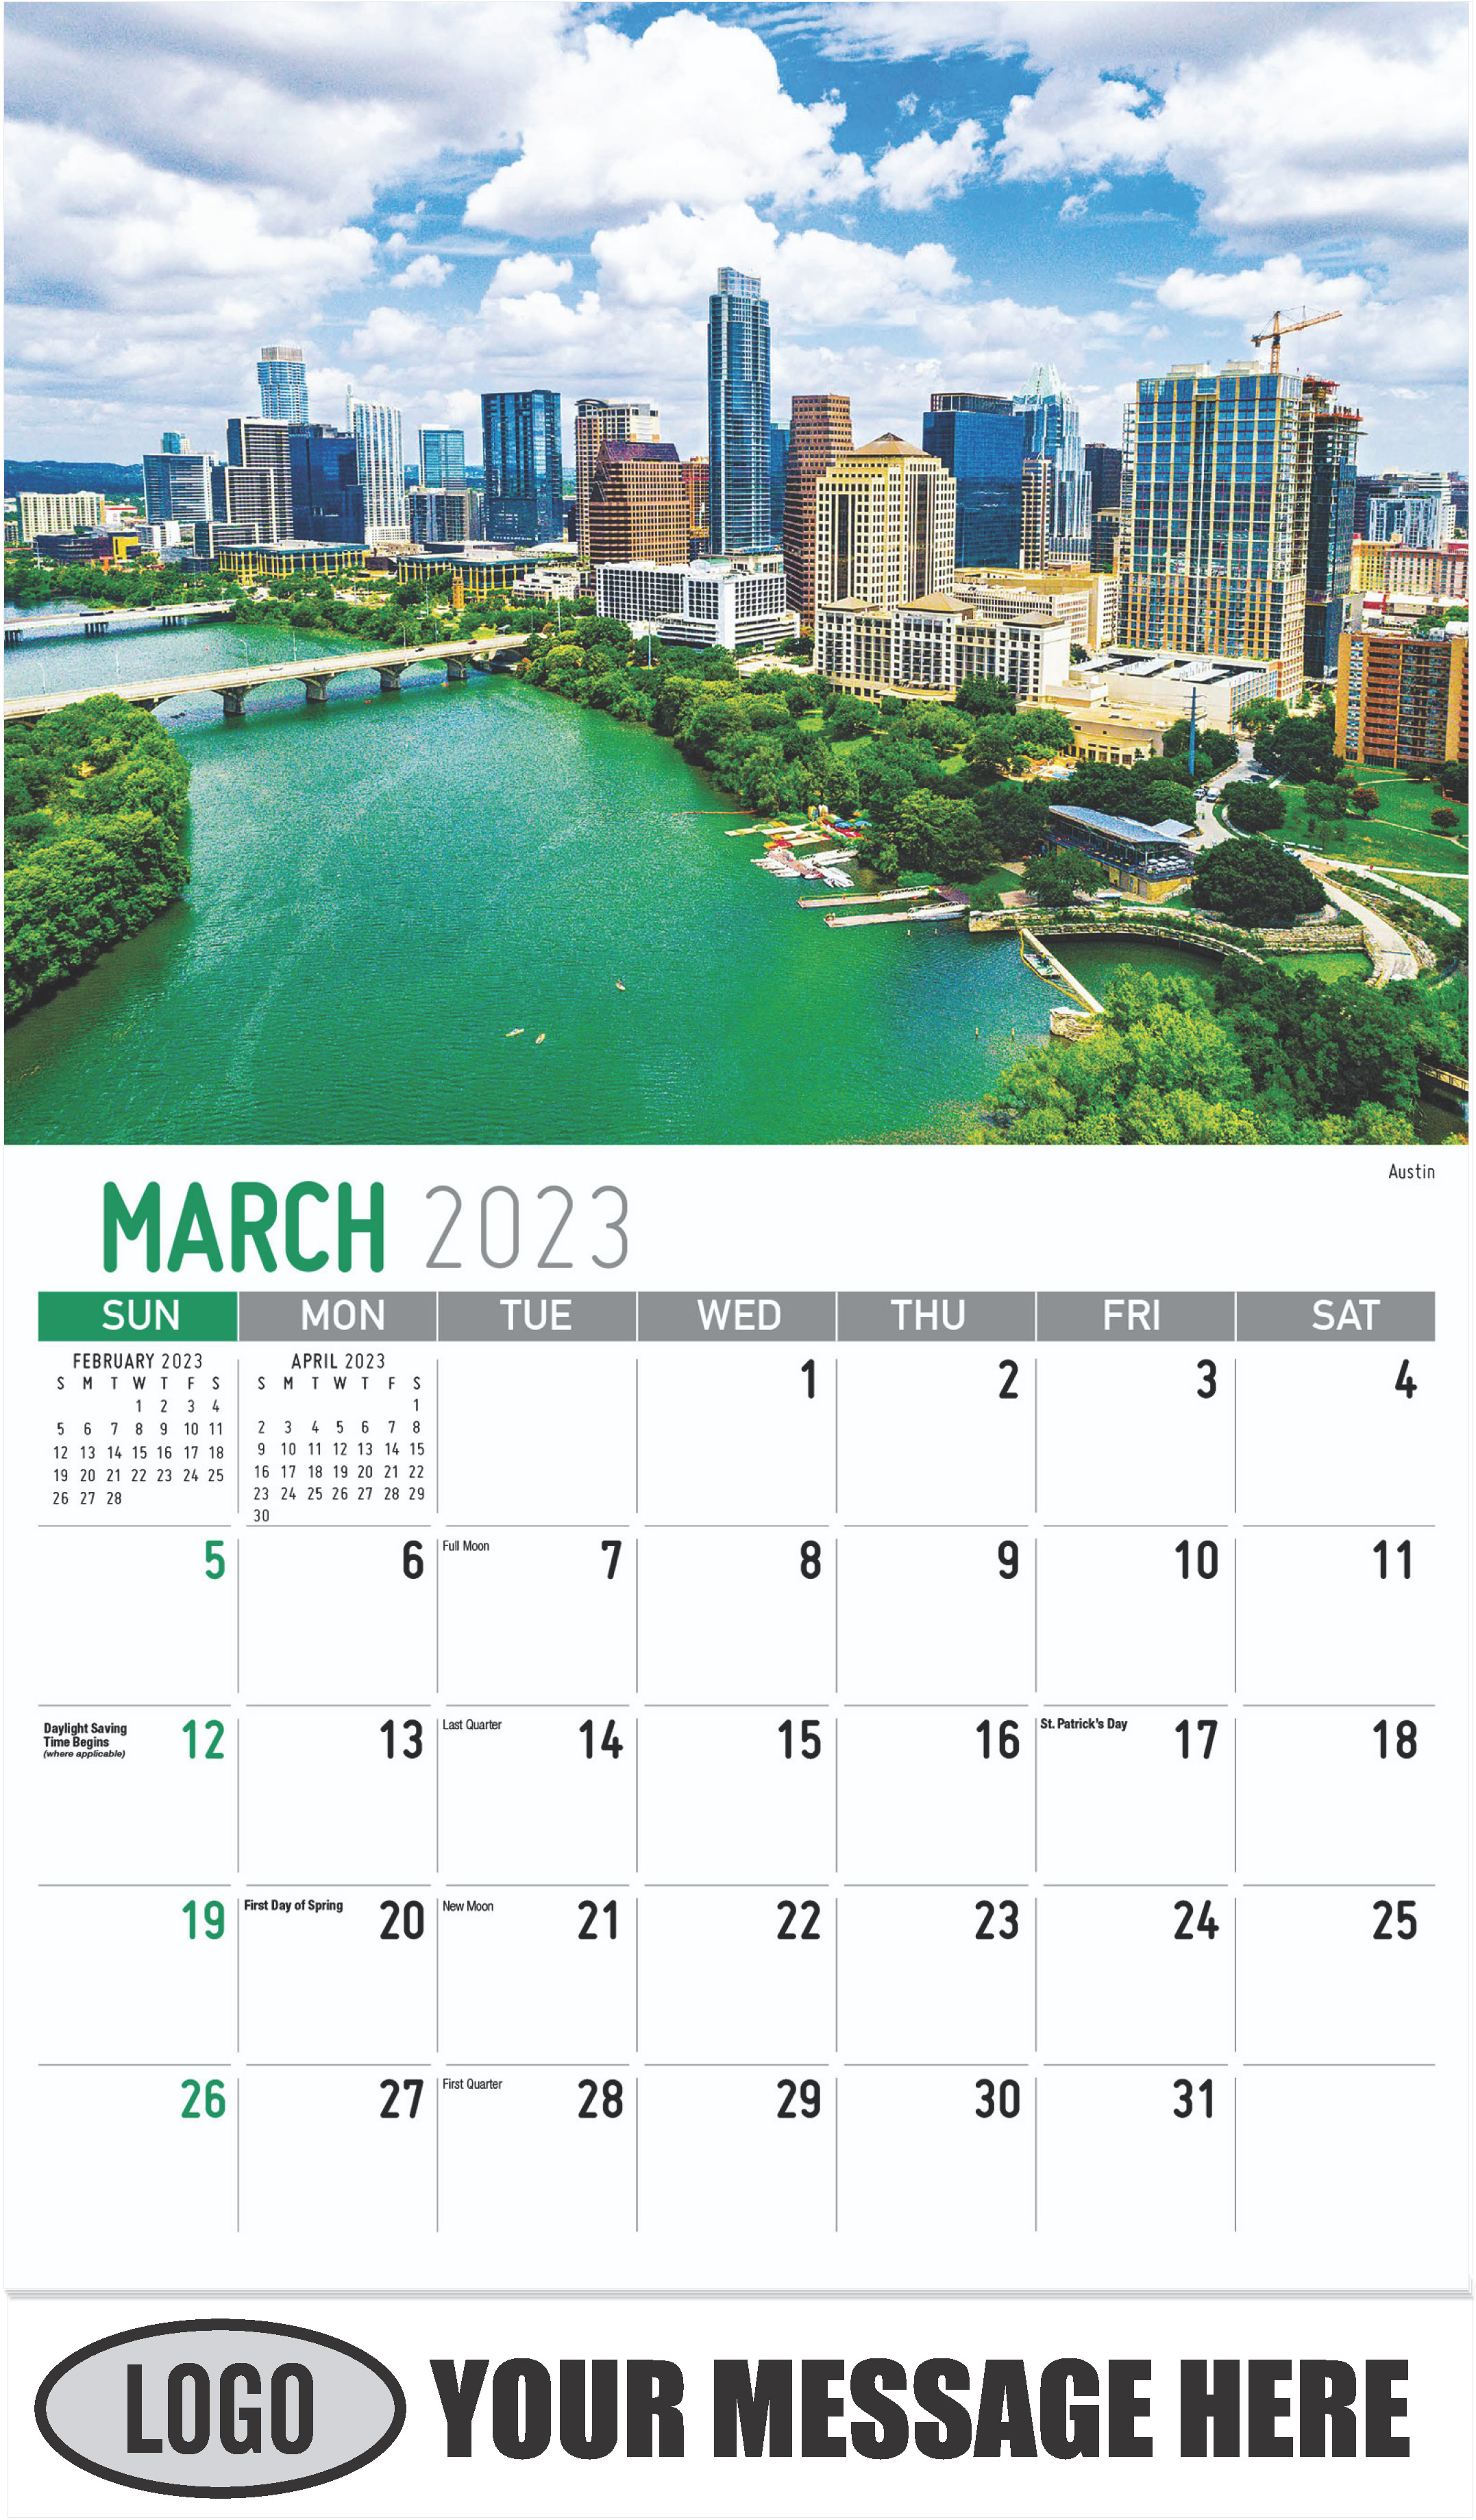 Austin - March - Scenes of Texas 2023 Promotional Calendar